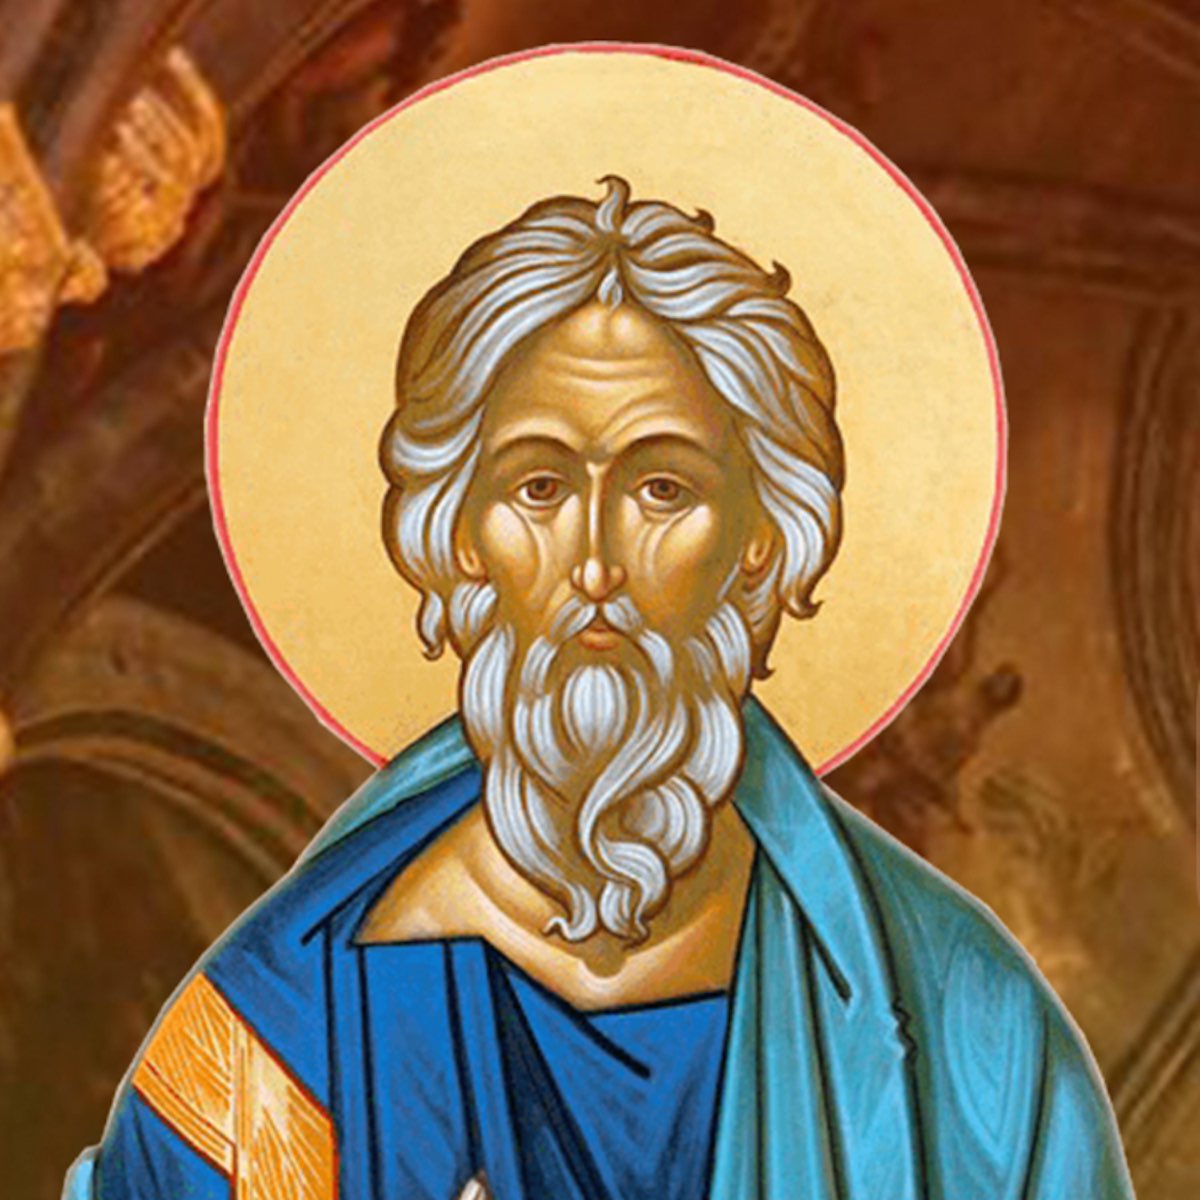 Acatistul Sfantului Apostol Andrei by Vlad Rosu on Apple Music